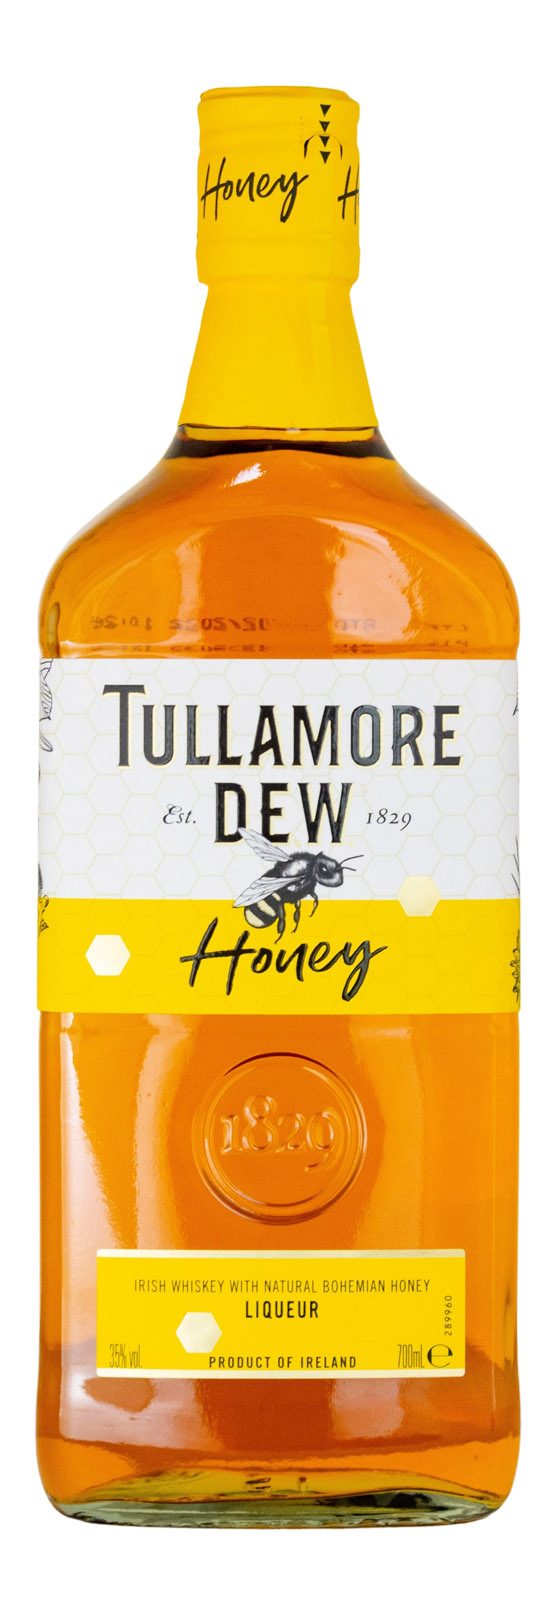 günstig Dew Tullamore Honey Whisky kaufen